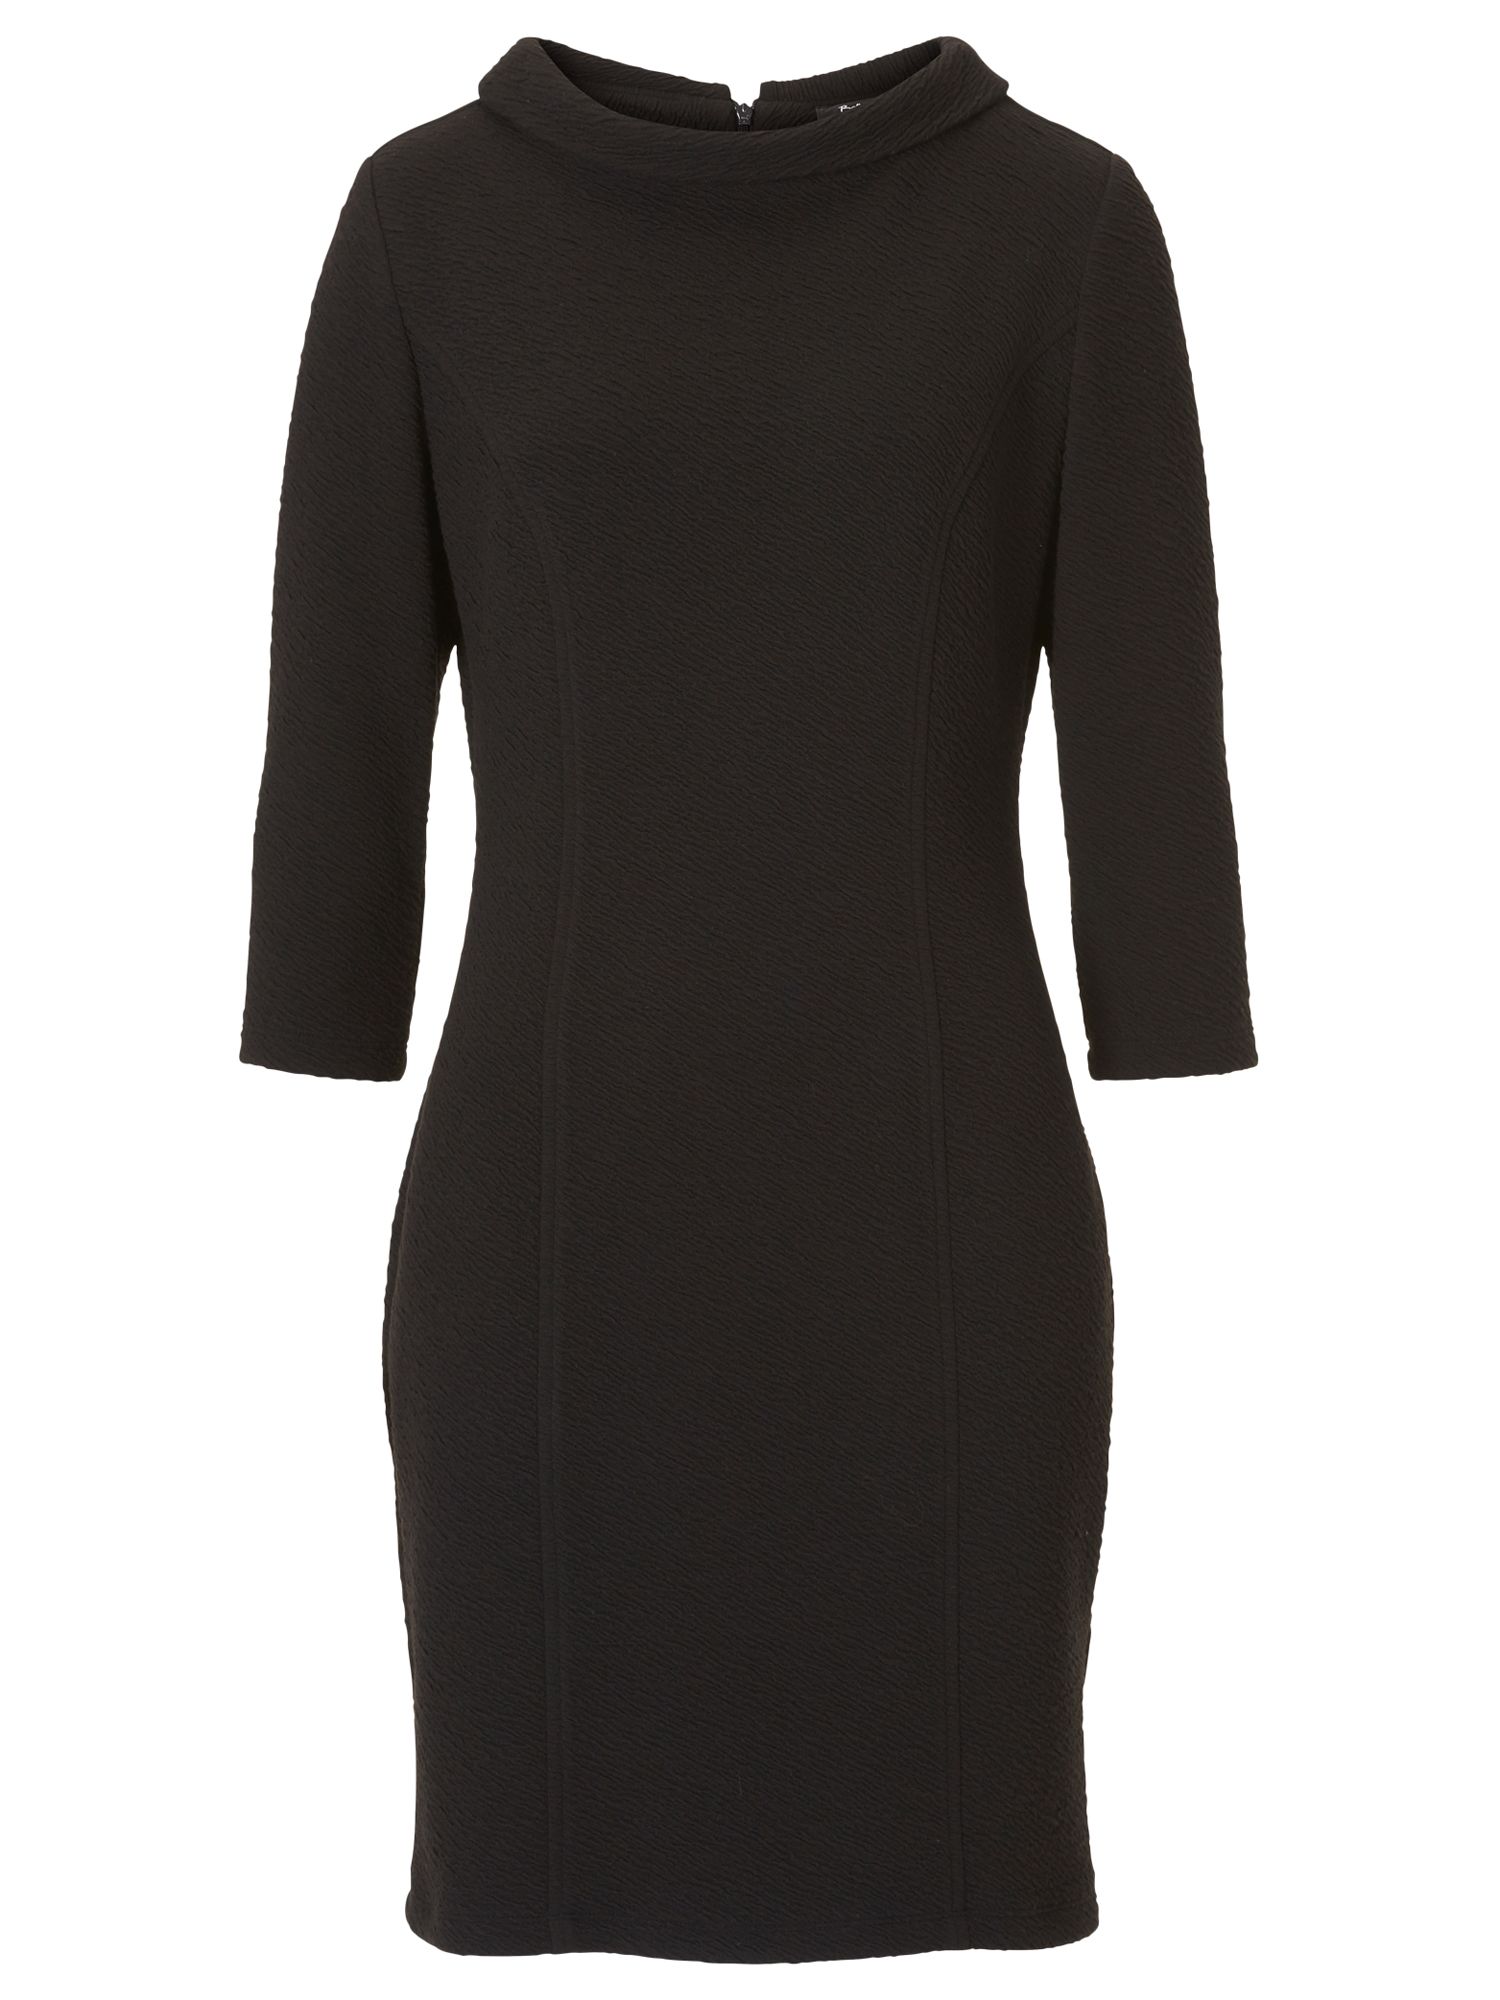 Betty Barclay Ripple Textured Dress, Black at John Lewis & Partners